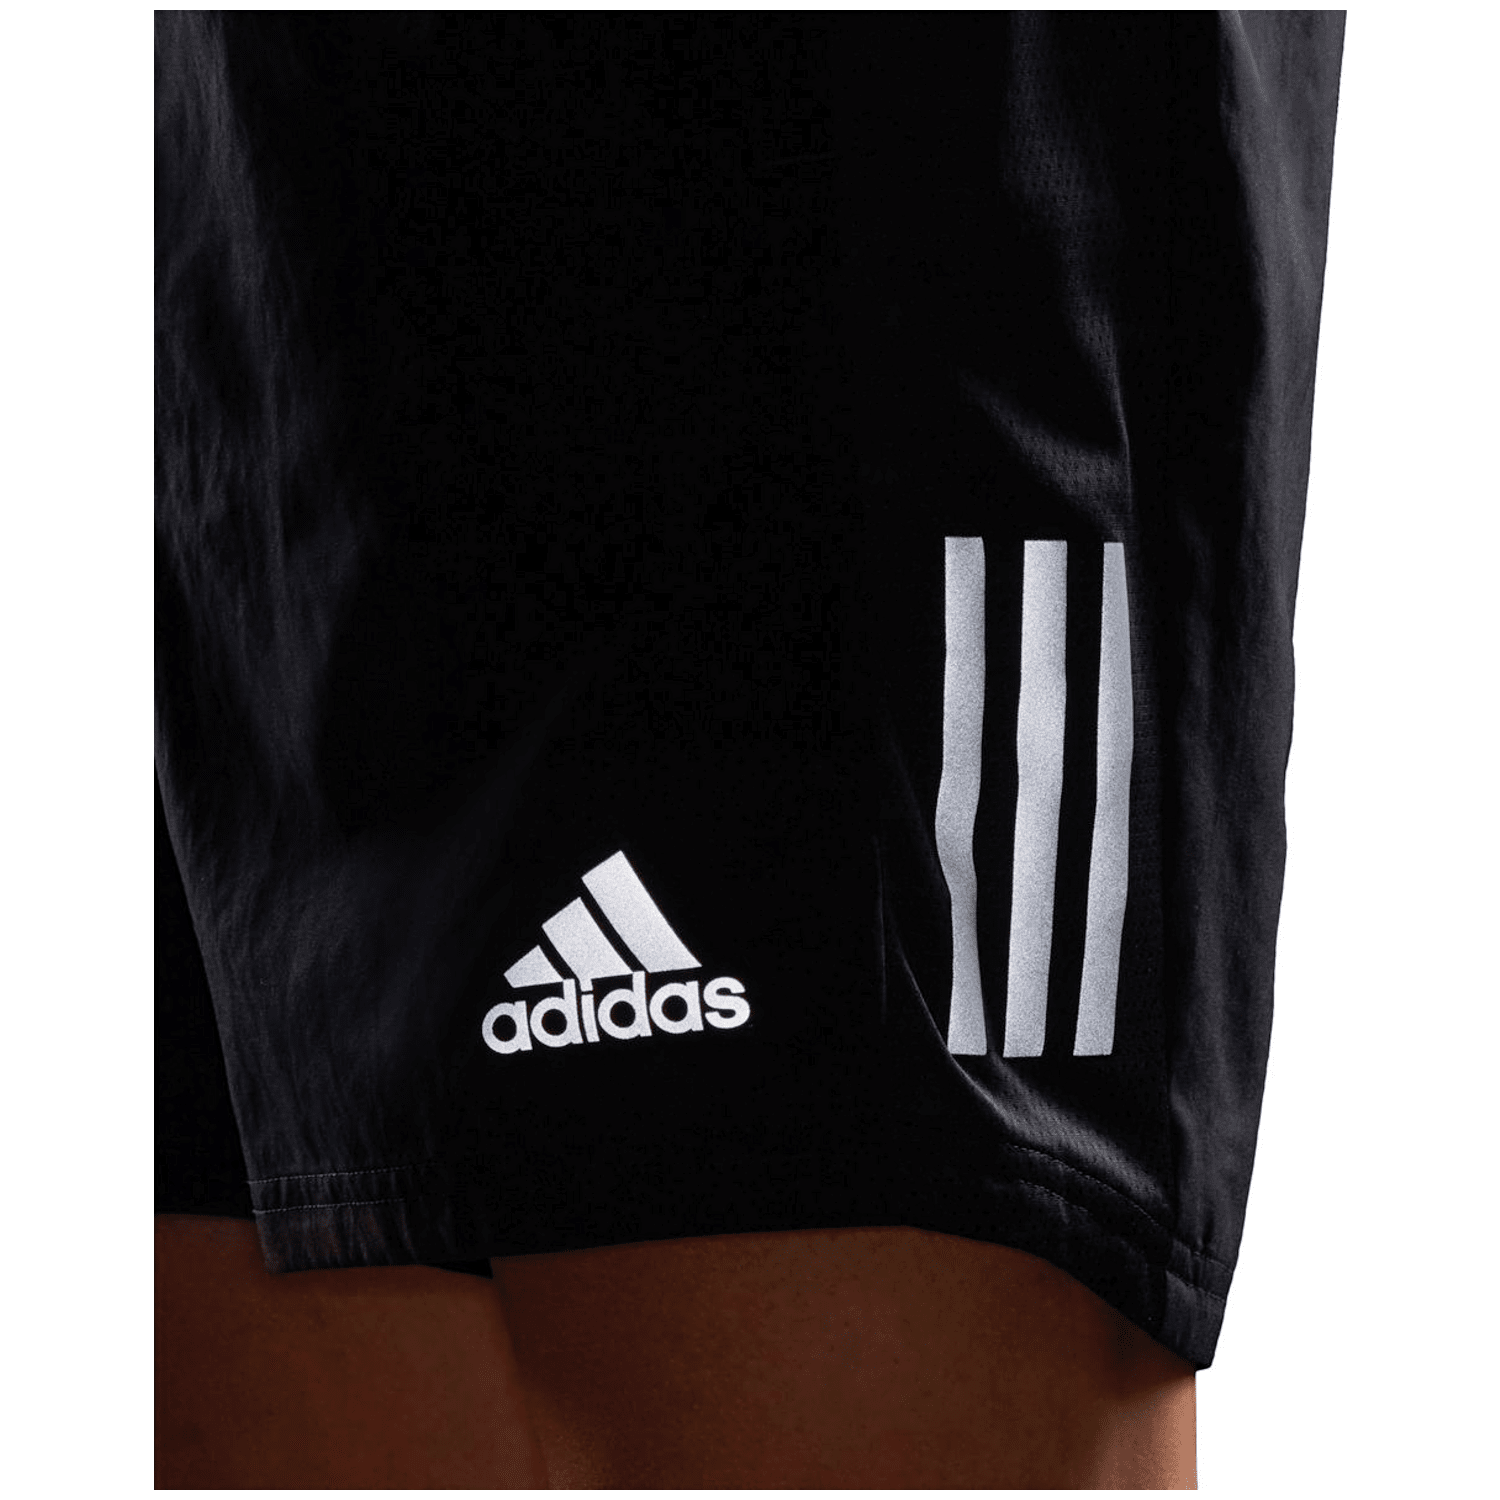 Adidas Own the Run Shorts 7" Herren